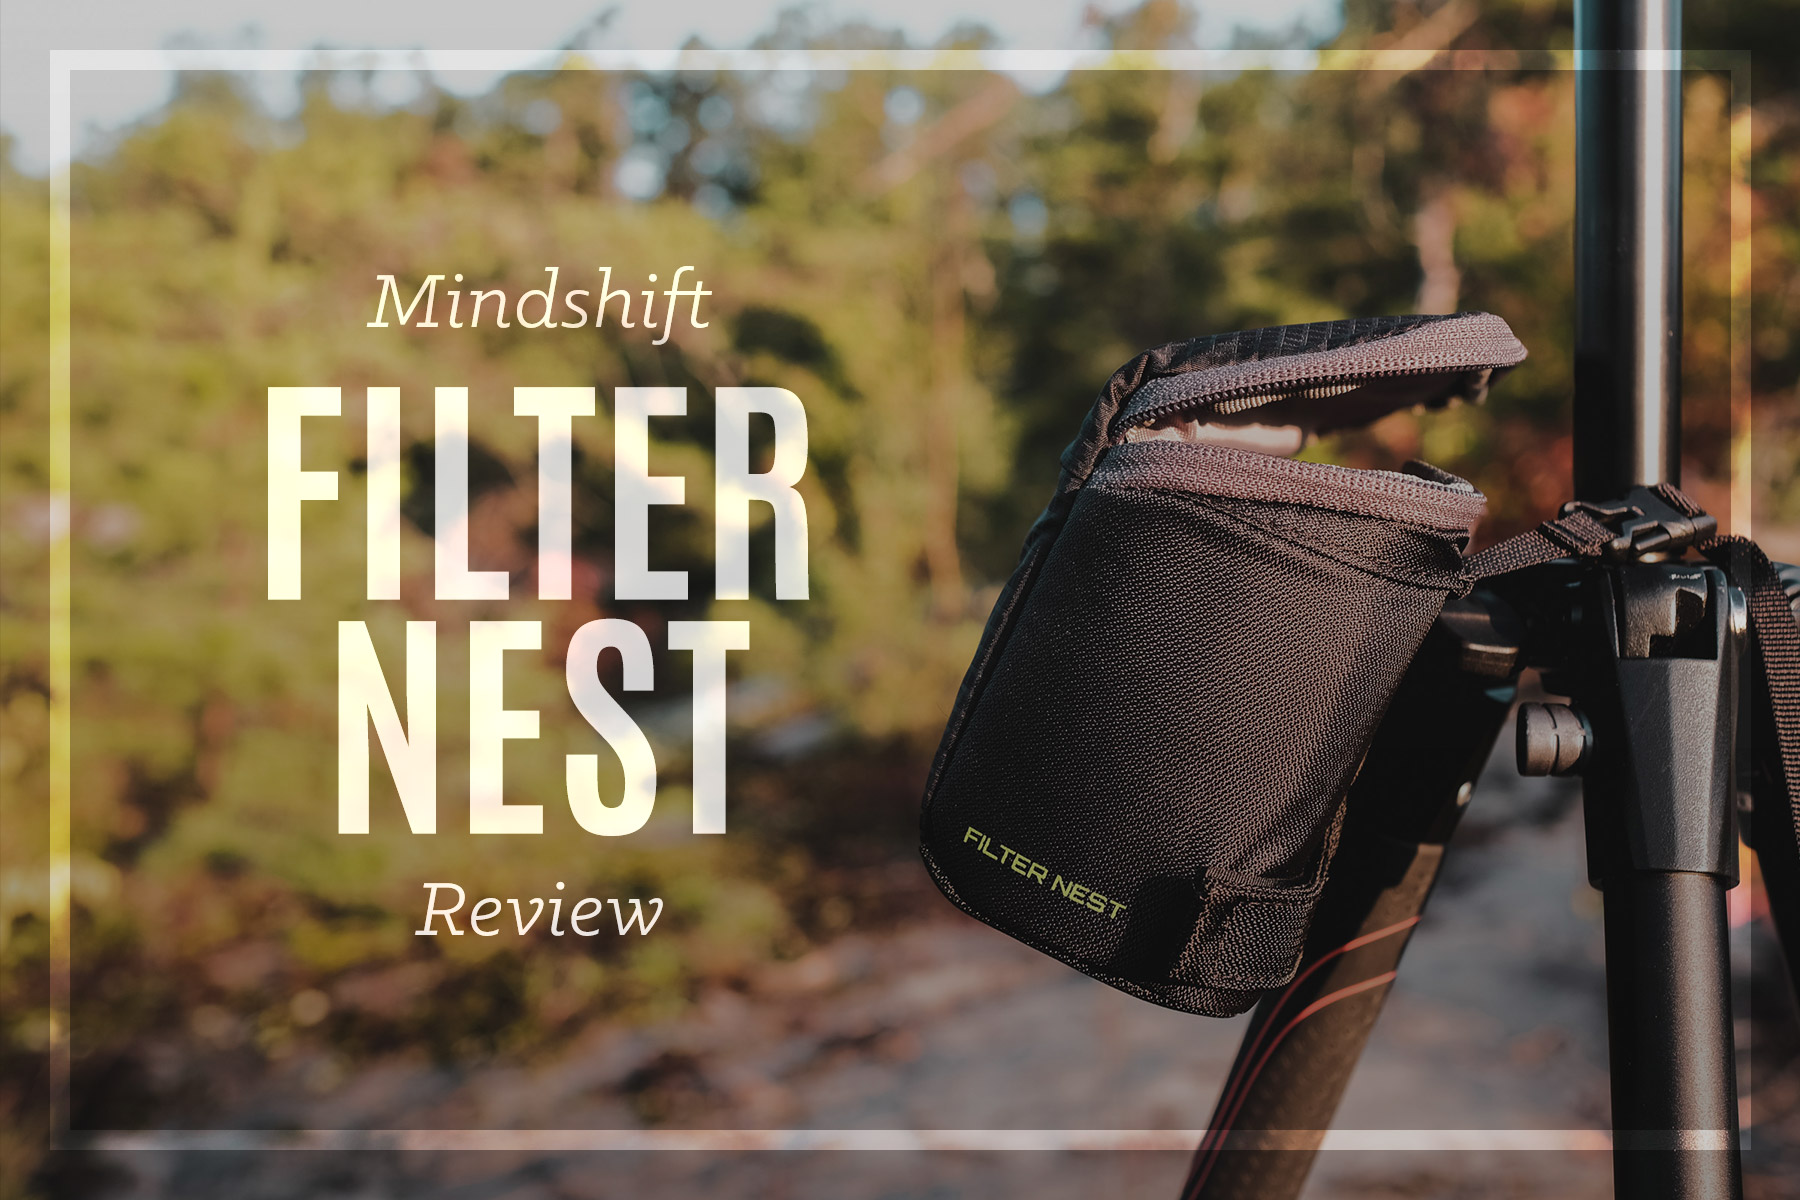 Mindshift Filter Nest Review